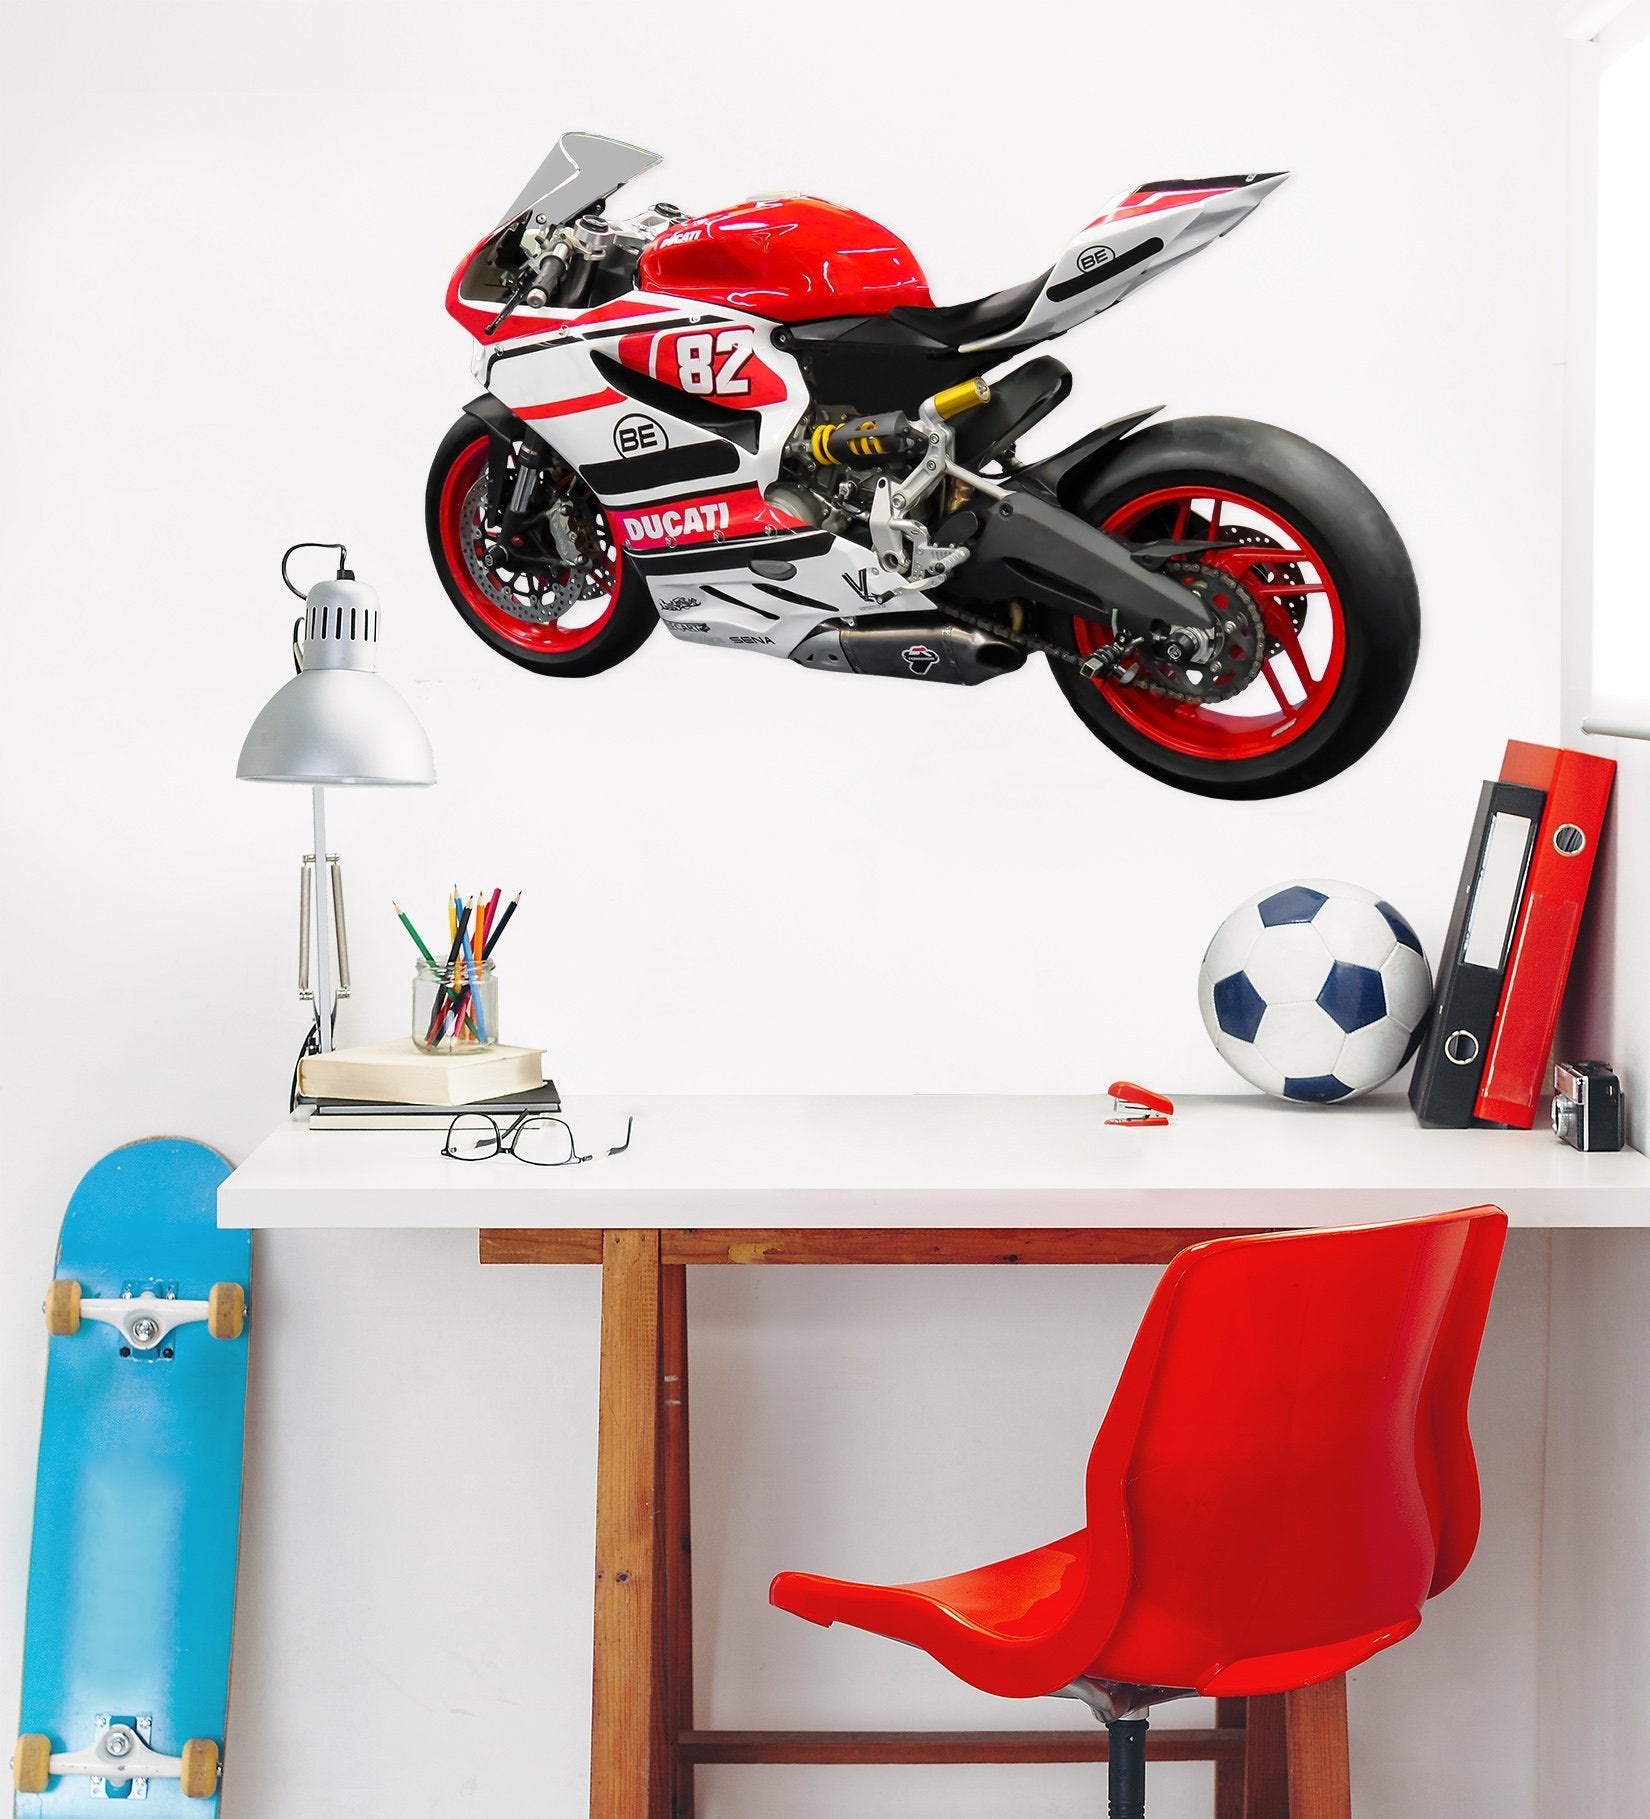 3D Ducati 0140 Vehicles Wallpaper AJ Wallpaper 